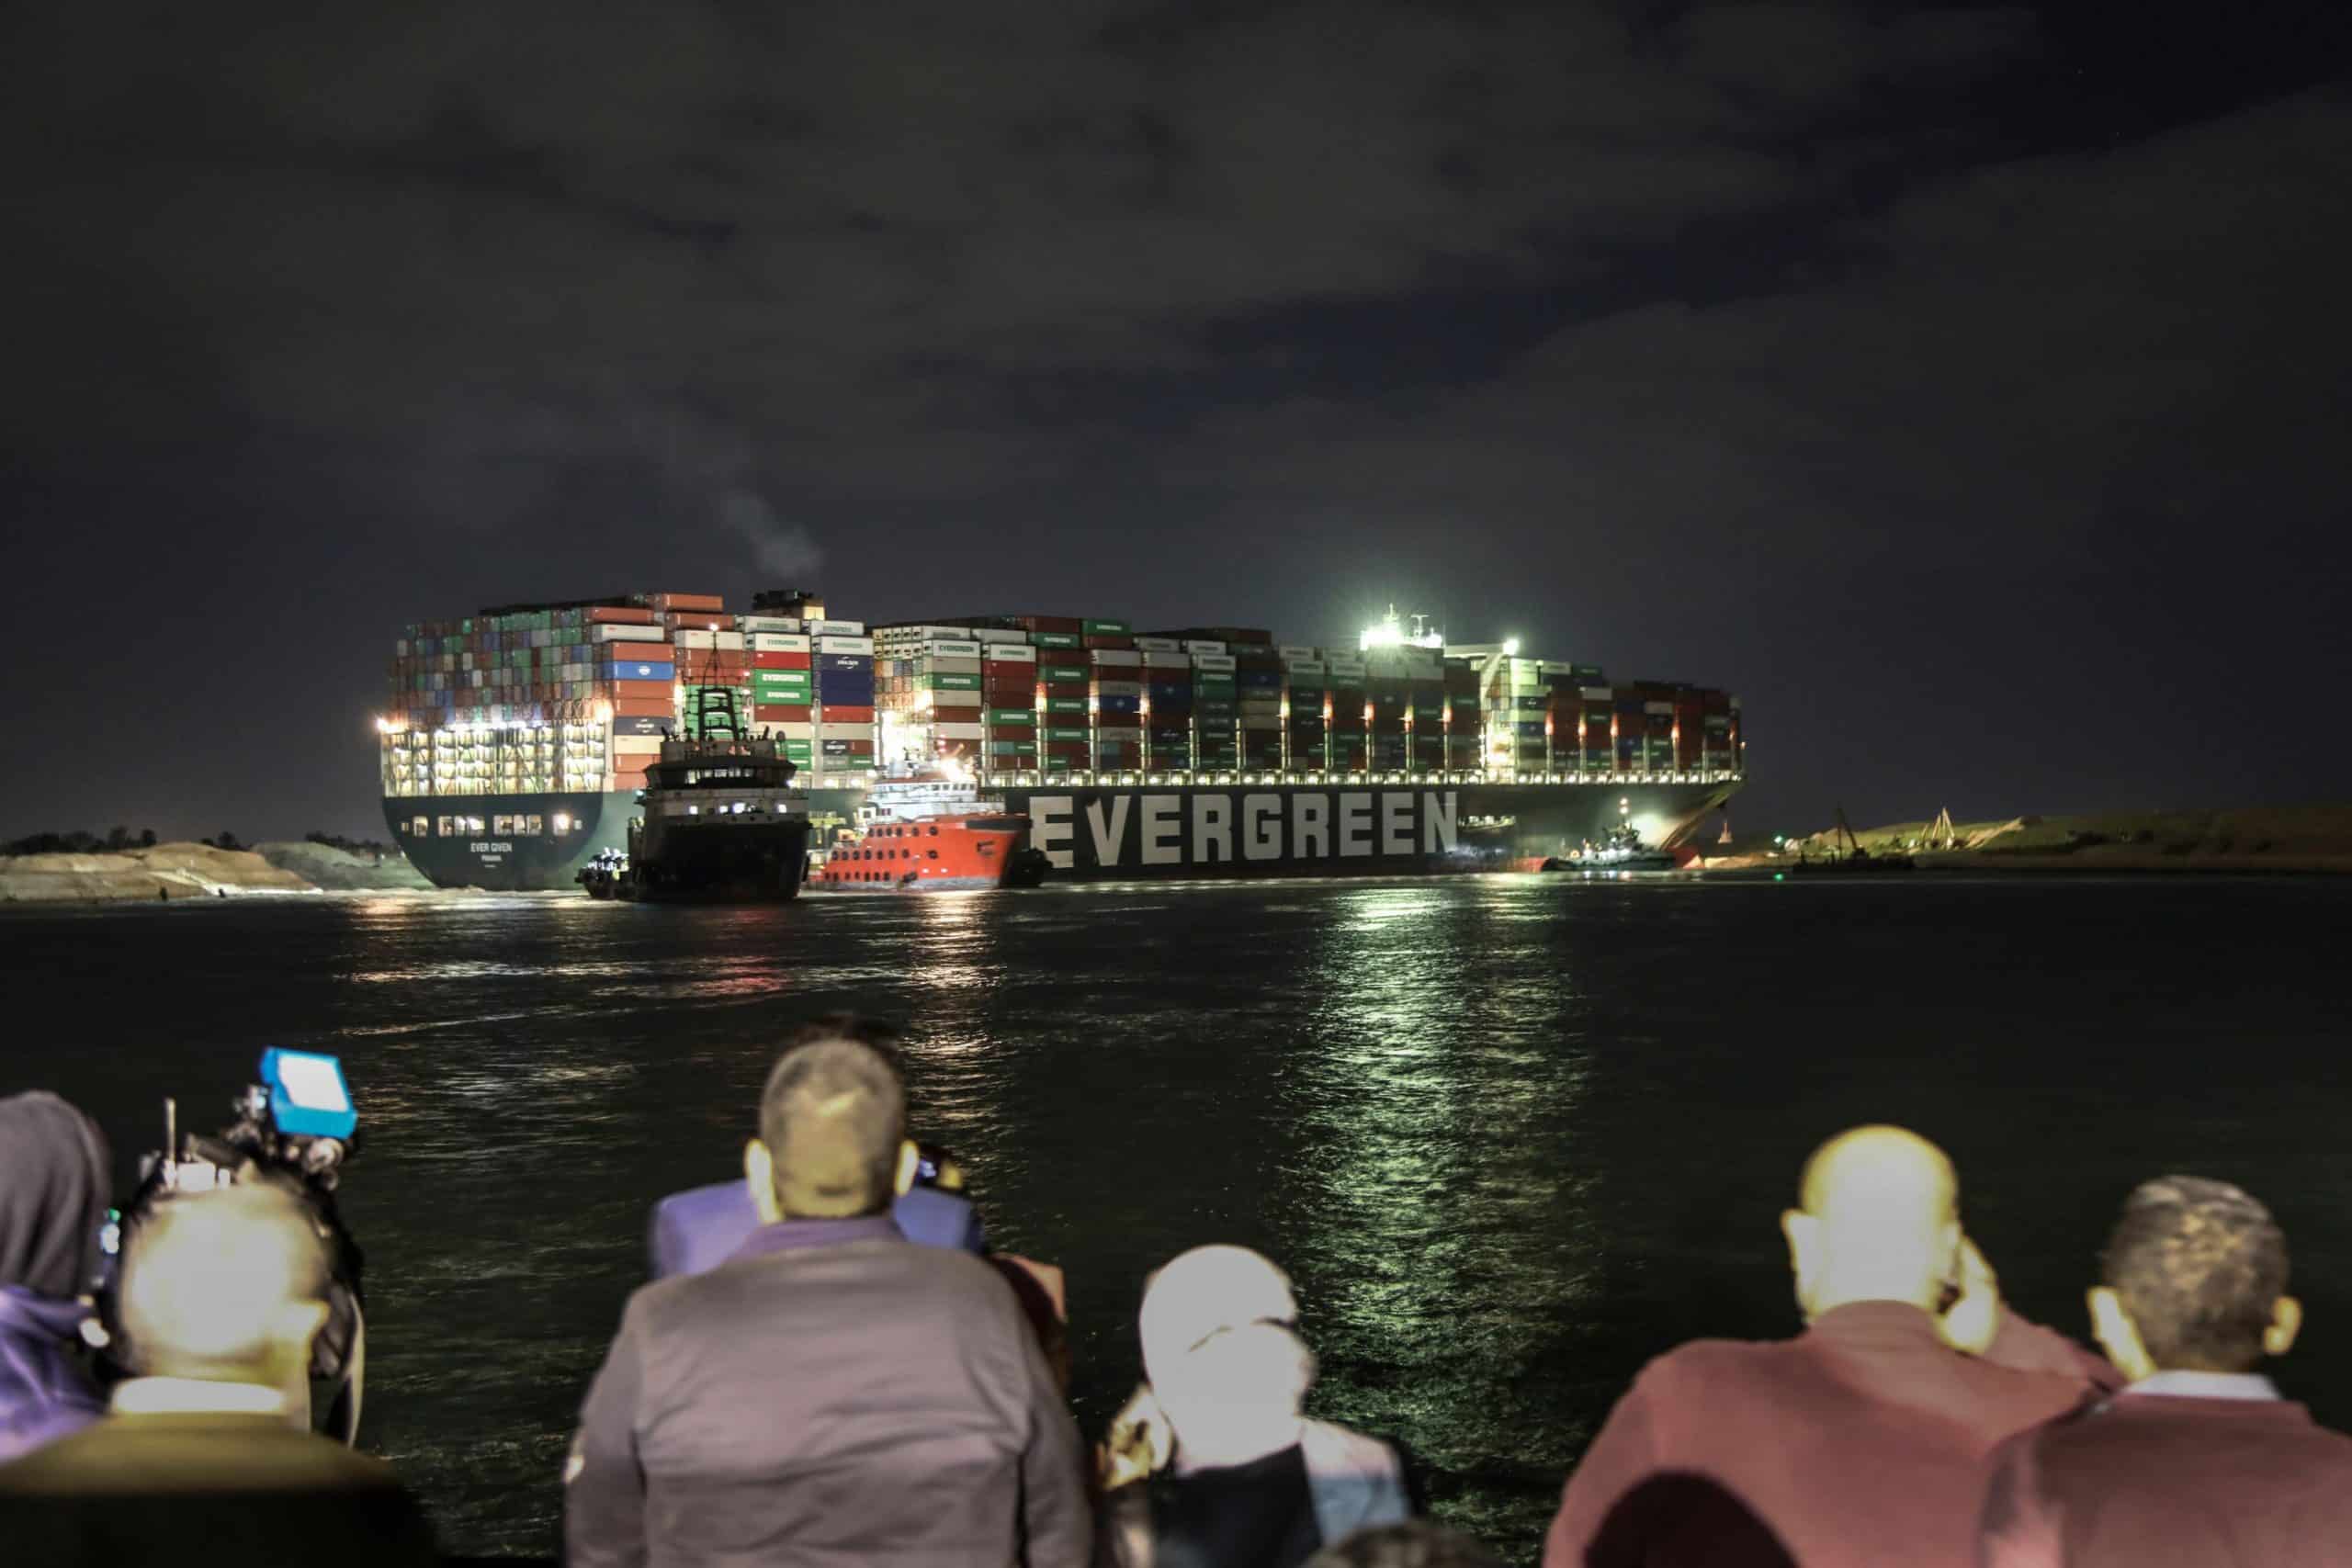 Suez Canal update: the big ship is still stuck